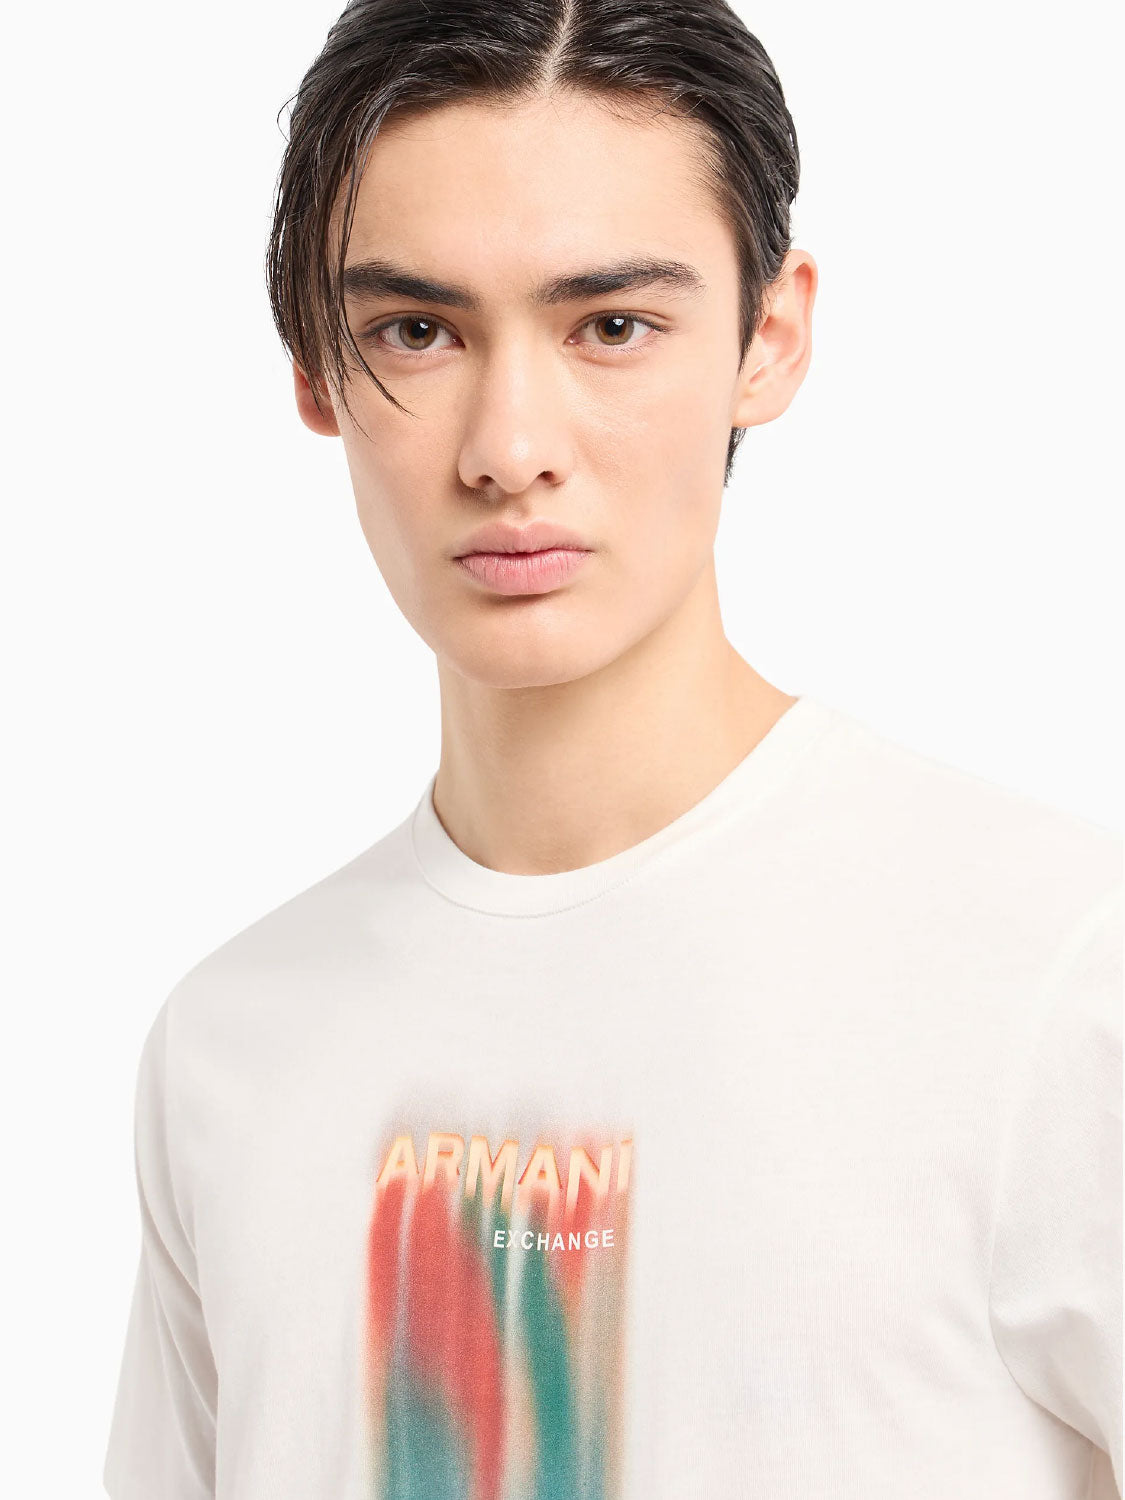 ARMANI EXCHANGE A|X - T-Shirt stampa arcobaleno